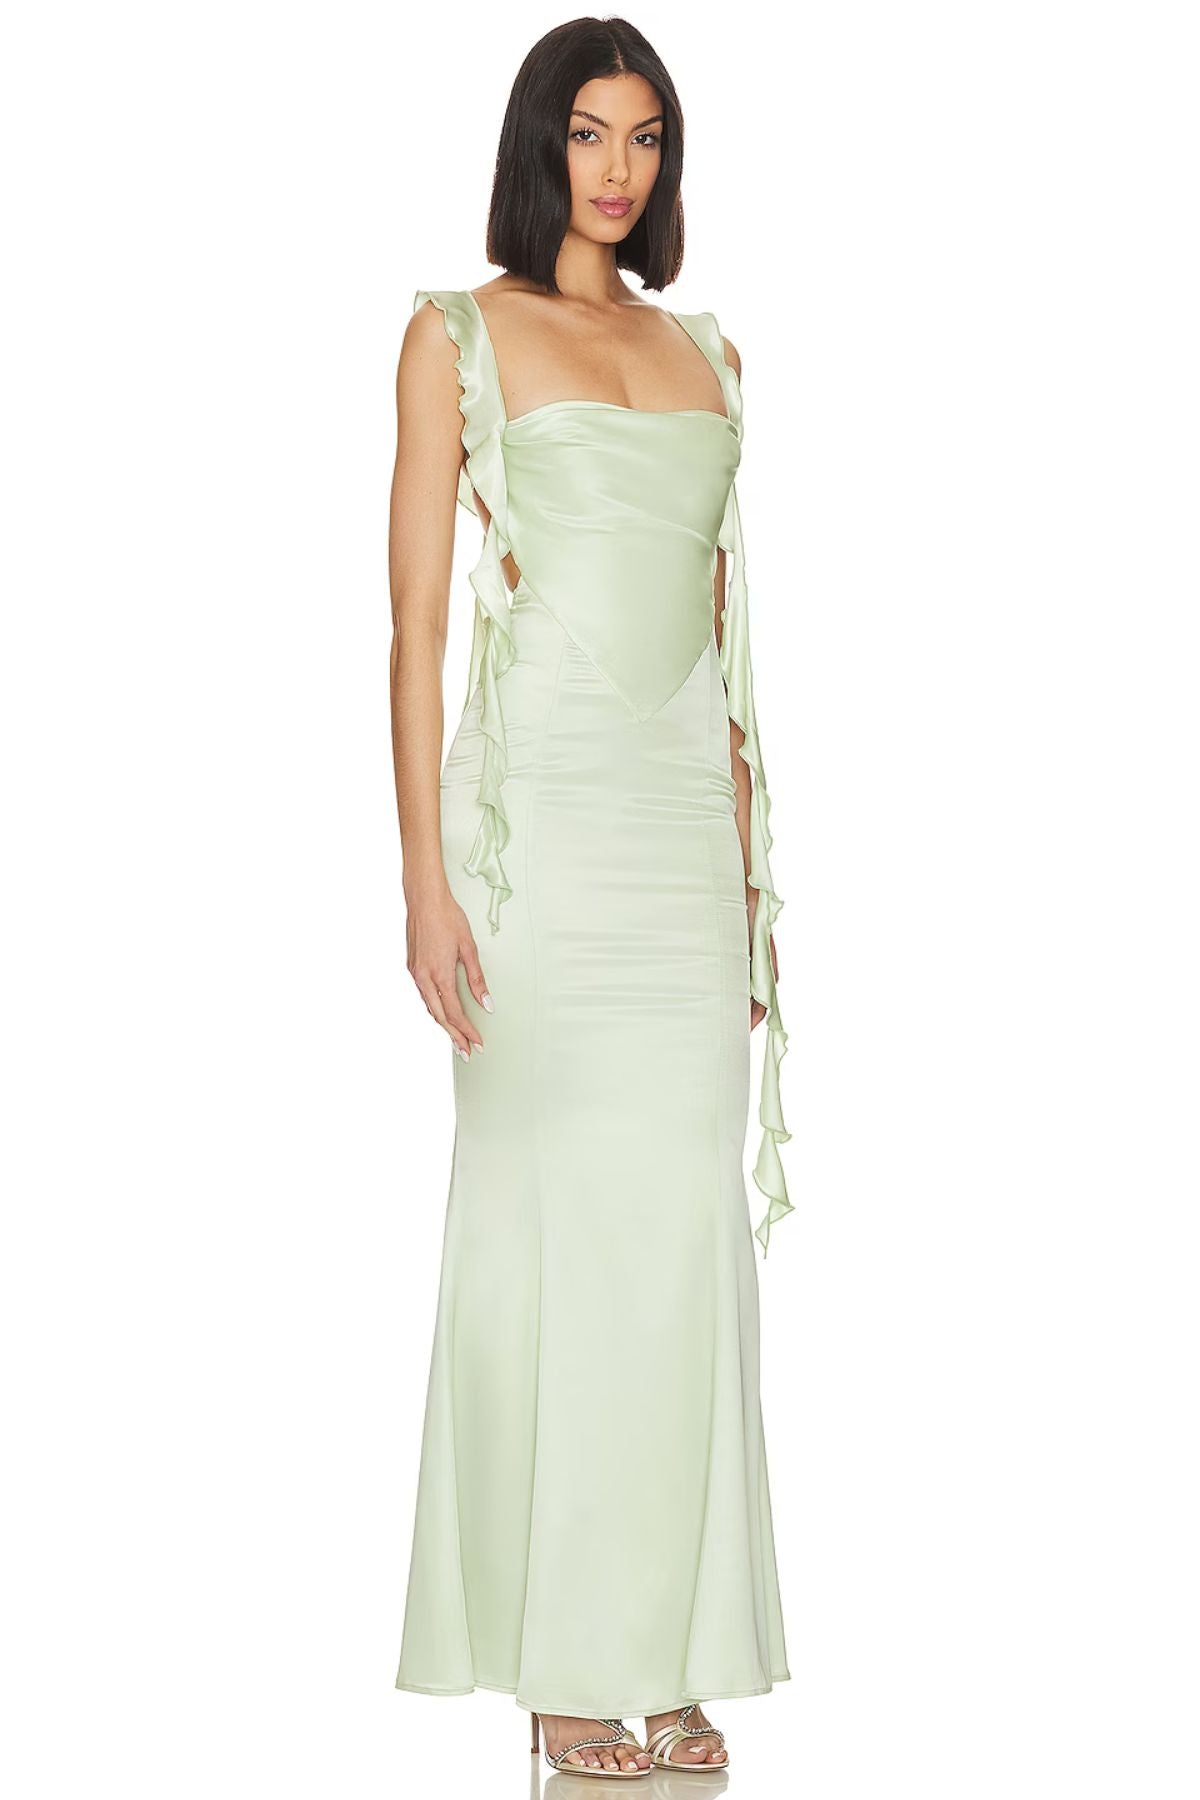 NANA JACQUELINE Caroline Dress (Green) - RRP $899